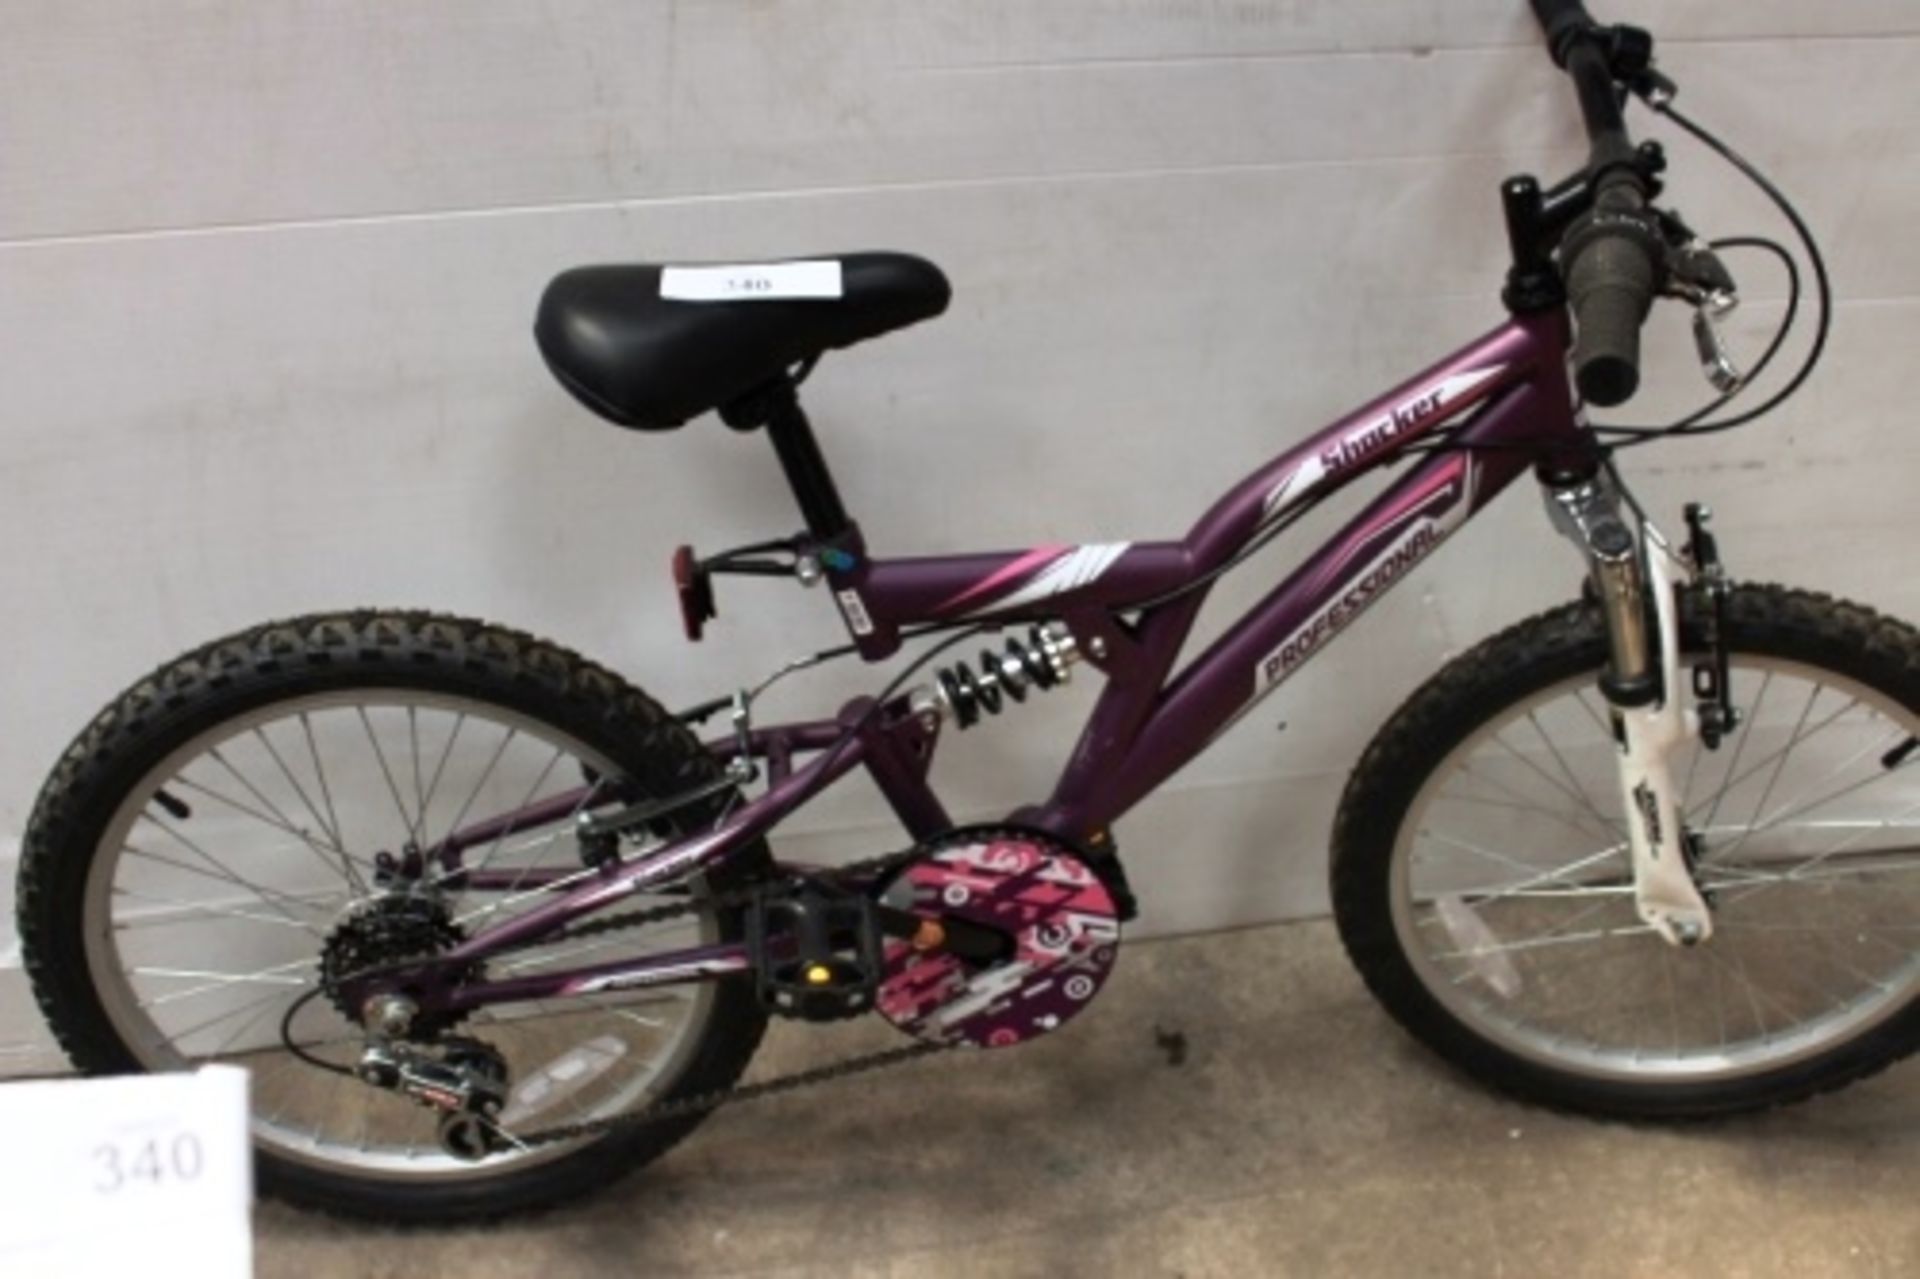 A Shacker Professional child's mountain bike, 12" frame, 19" wheels - New (GS15)